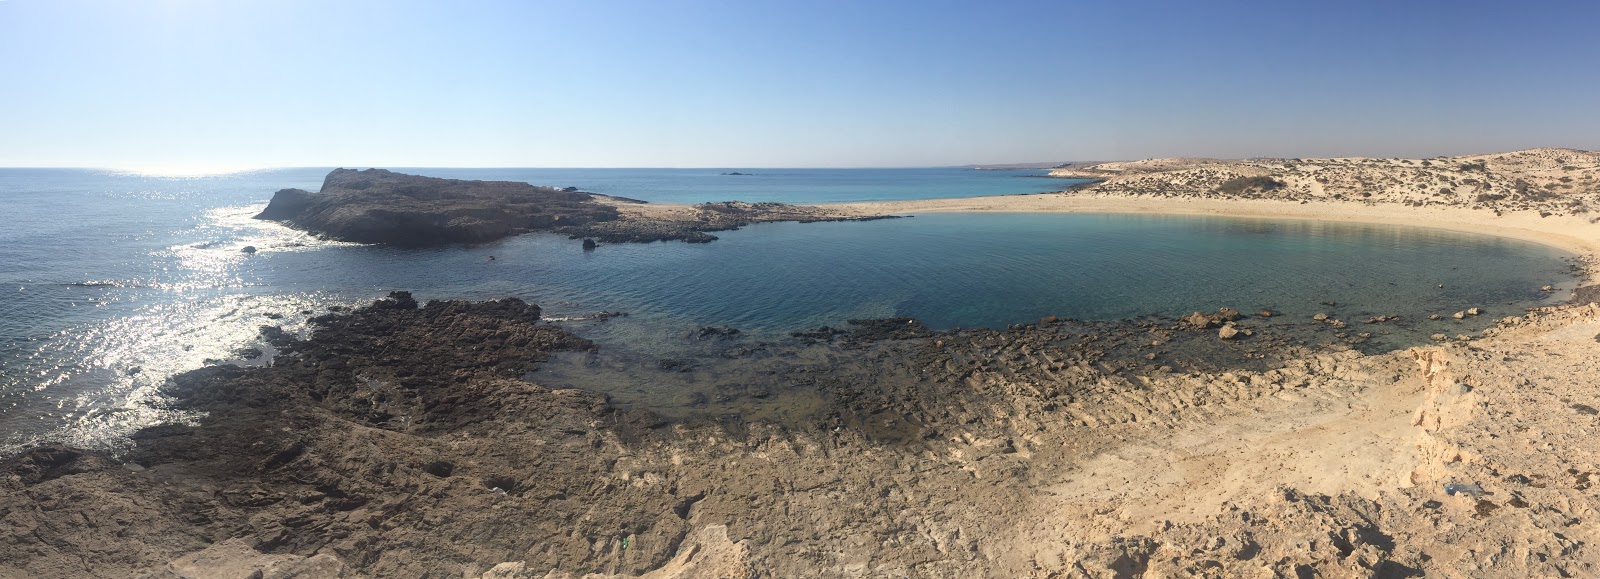 Photo de Ras El Hikma Beach avec moyenne baie